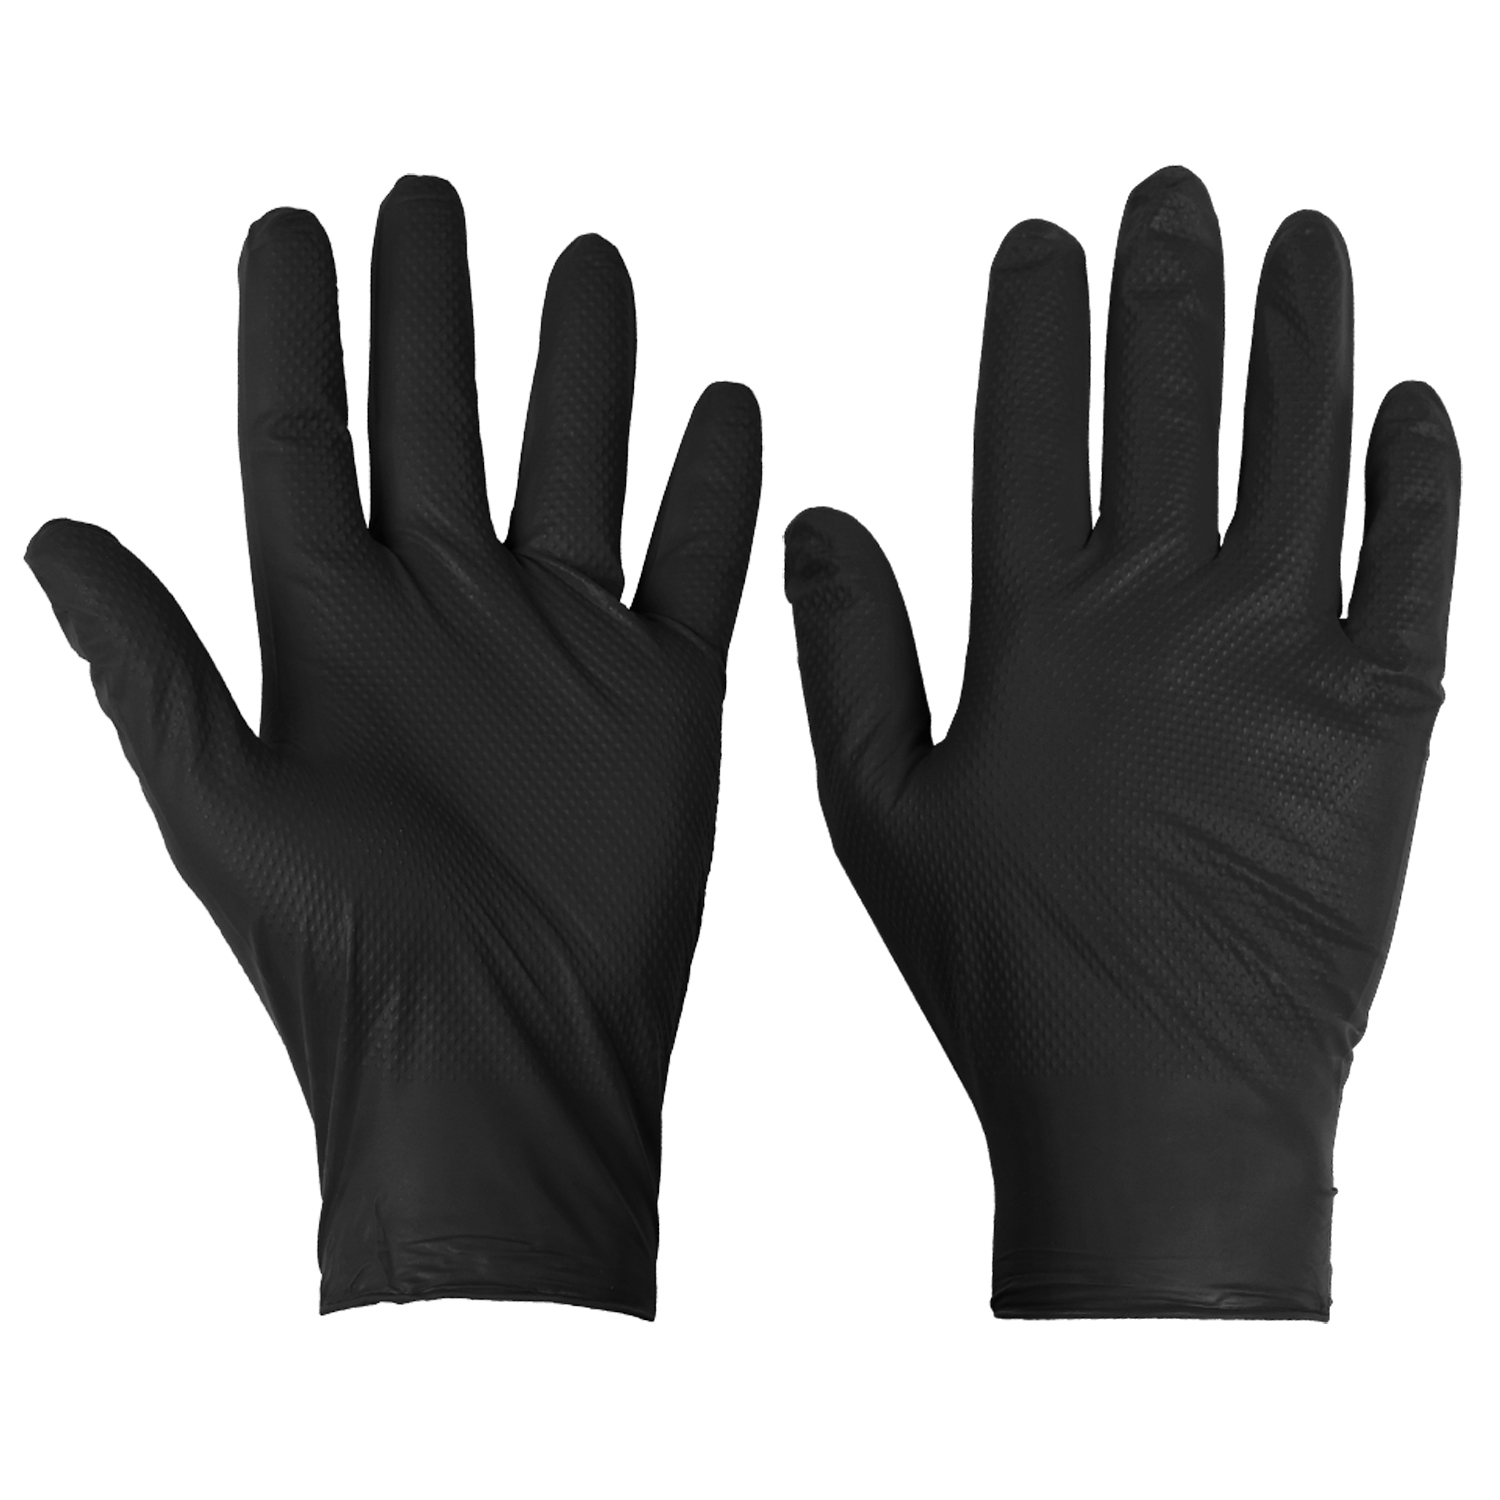 Black Diamond Grip - Nitrile Gloves - Powder Free - Small